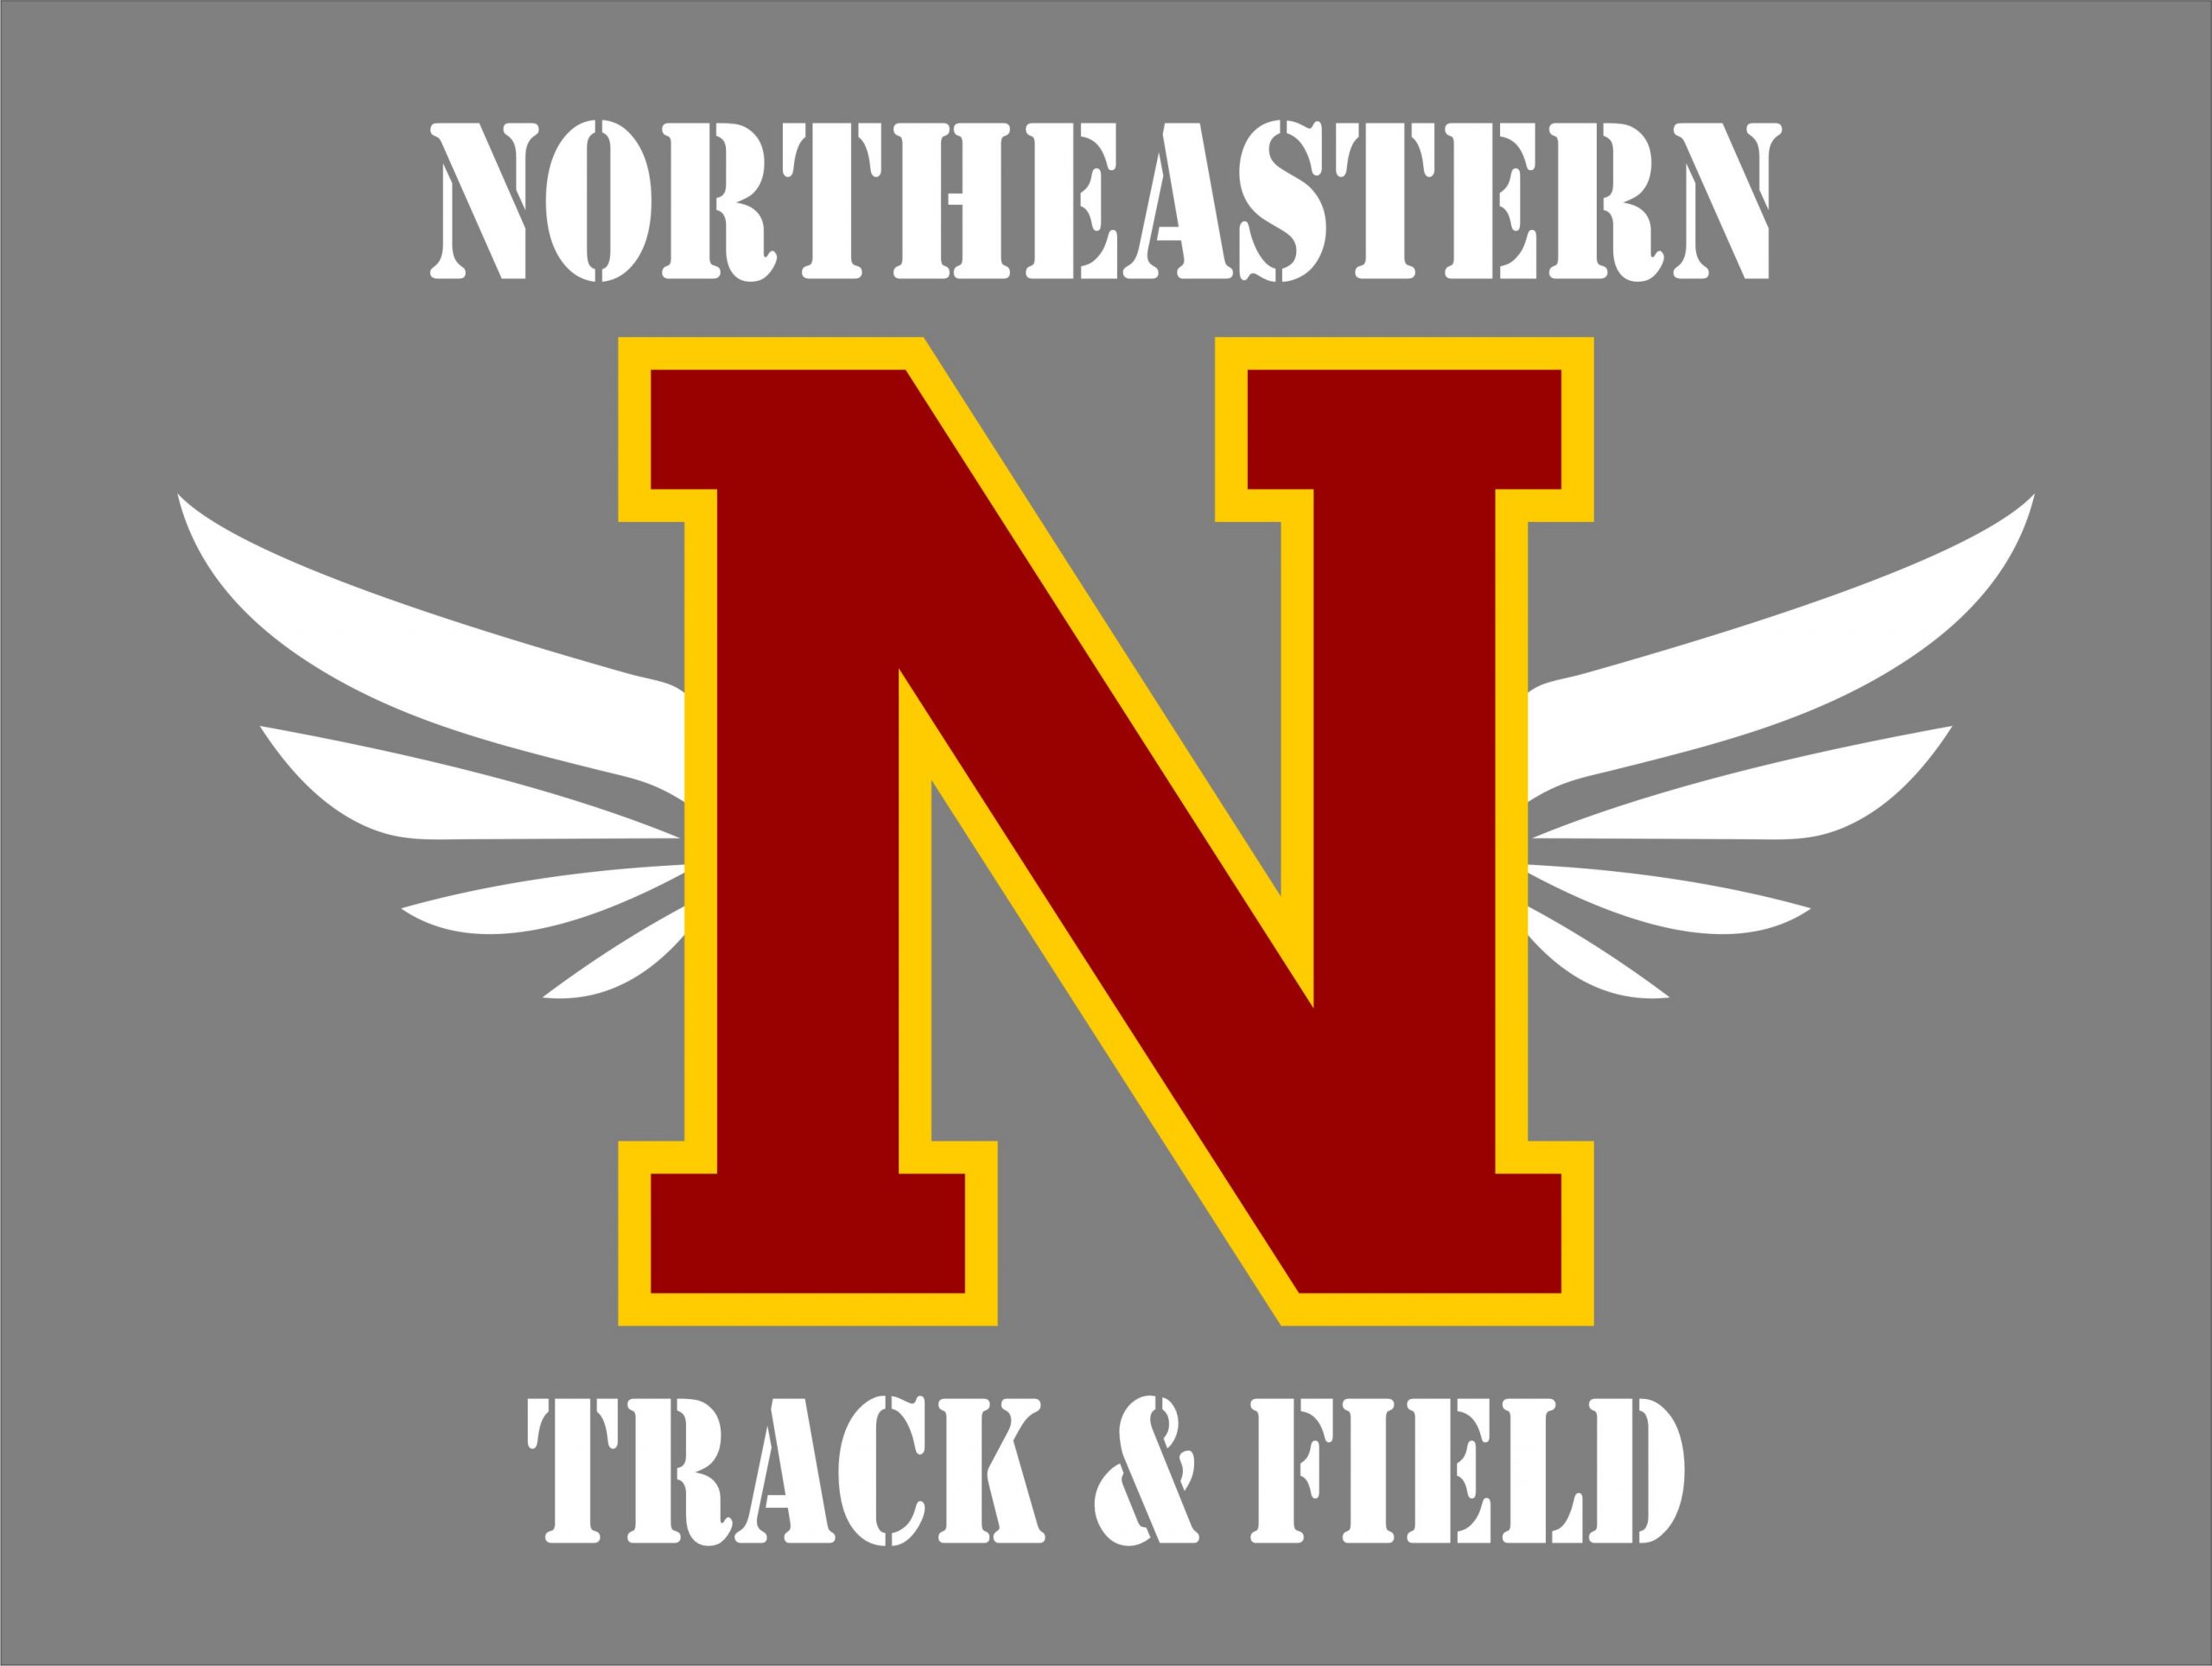 Northeastern Jets Track & Field